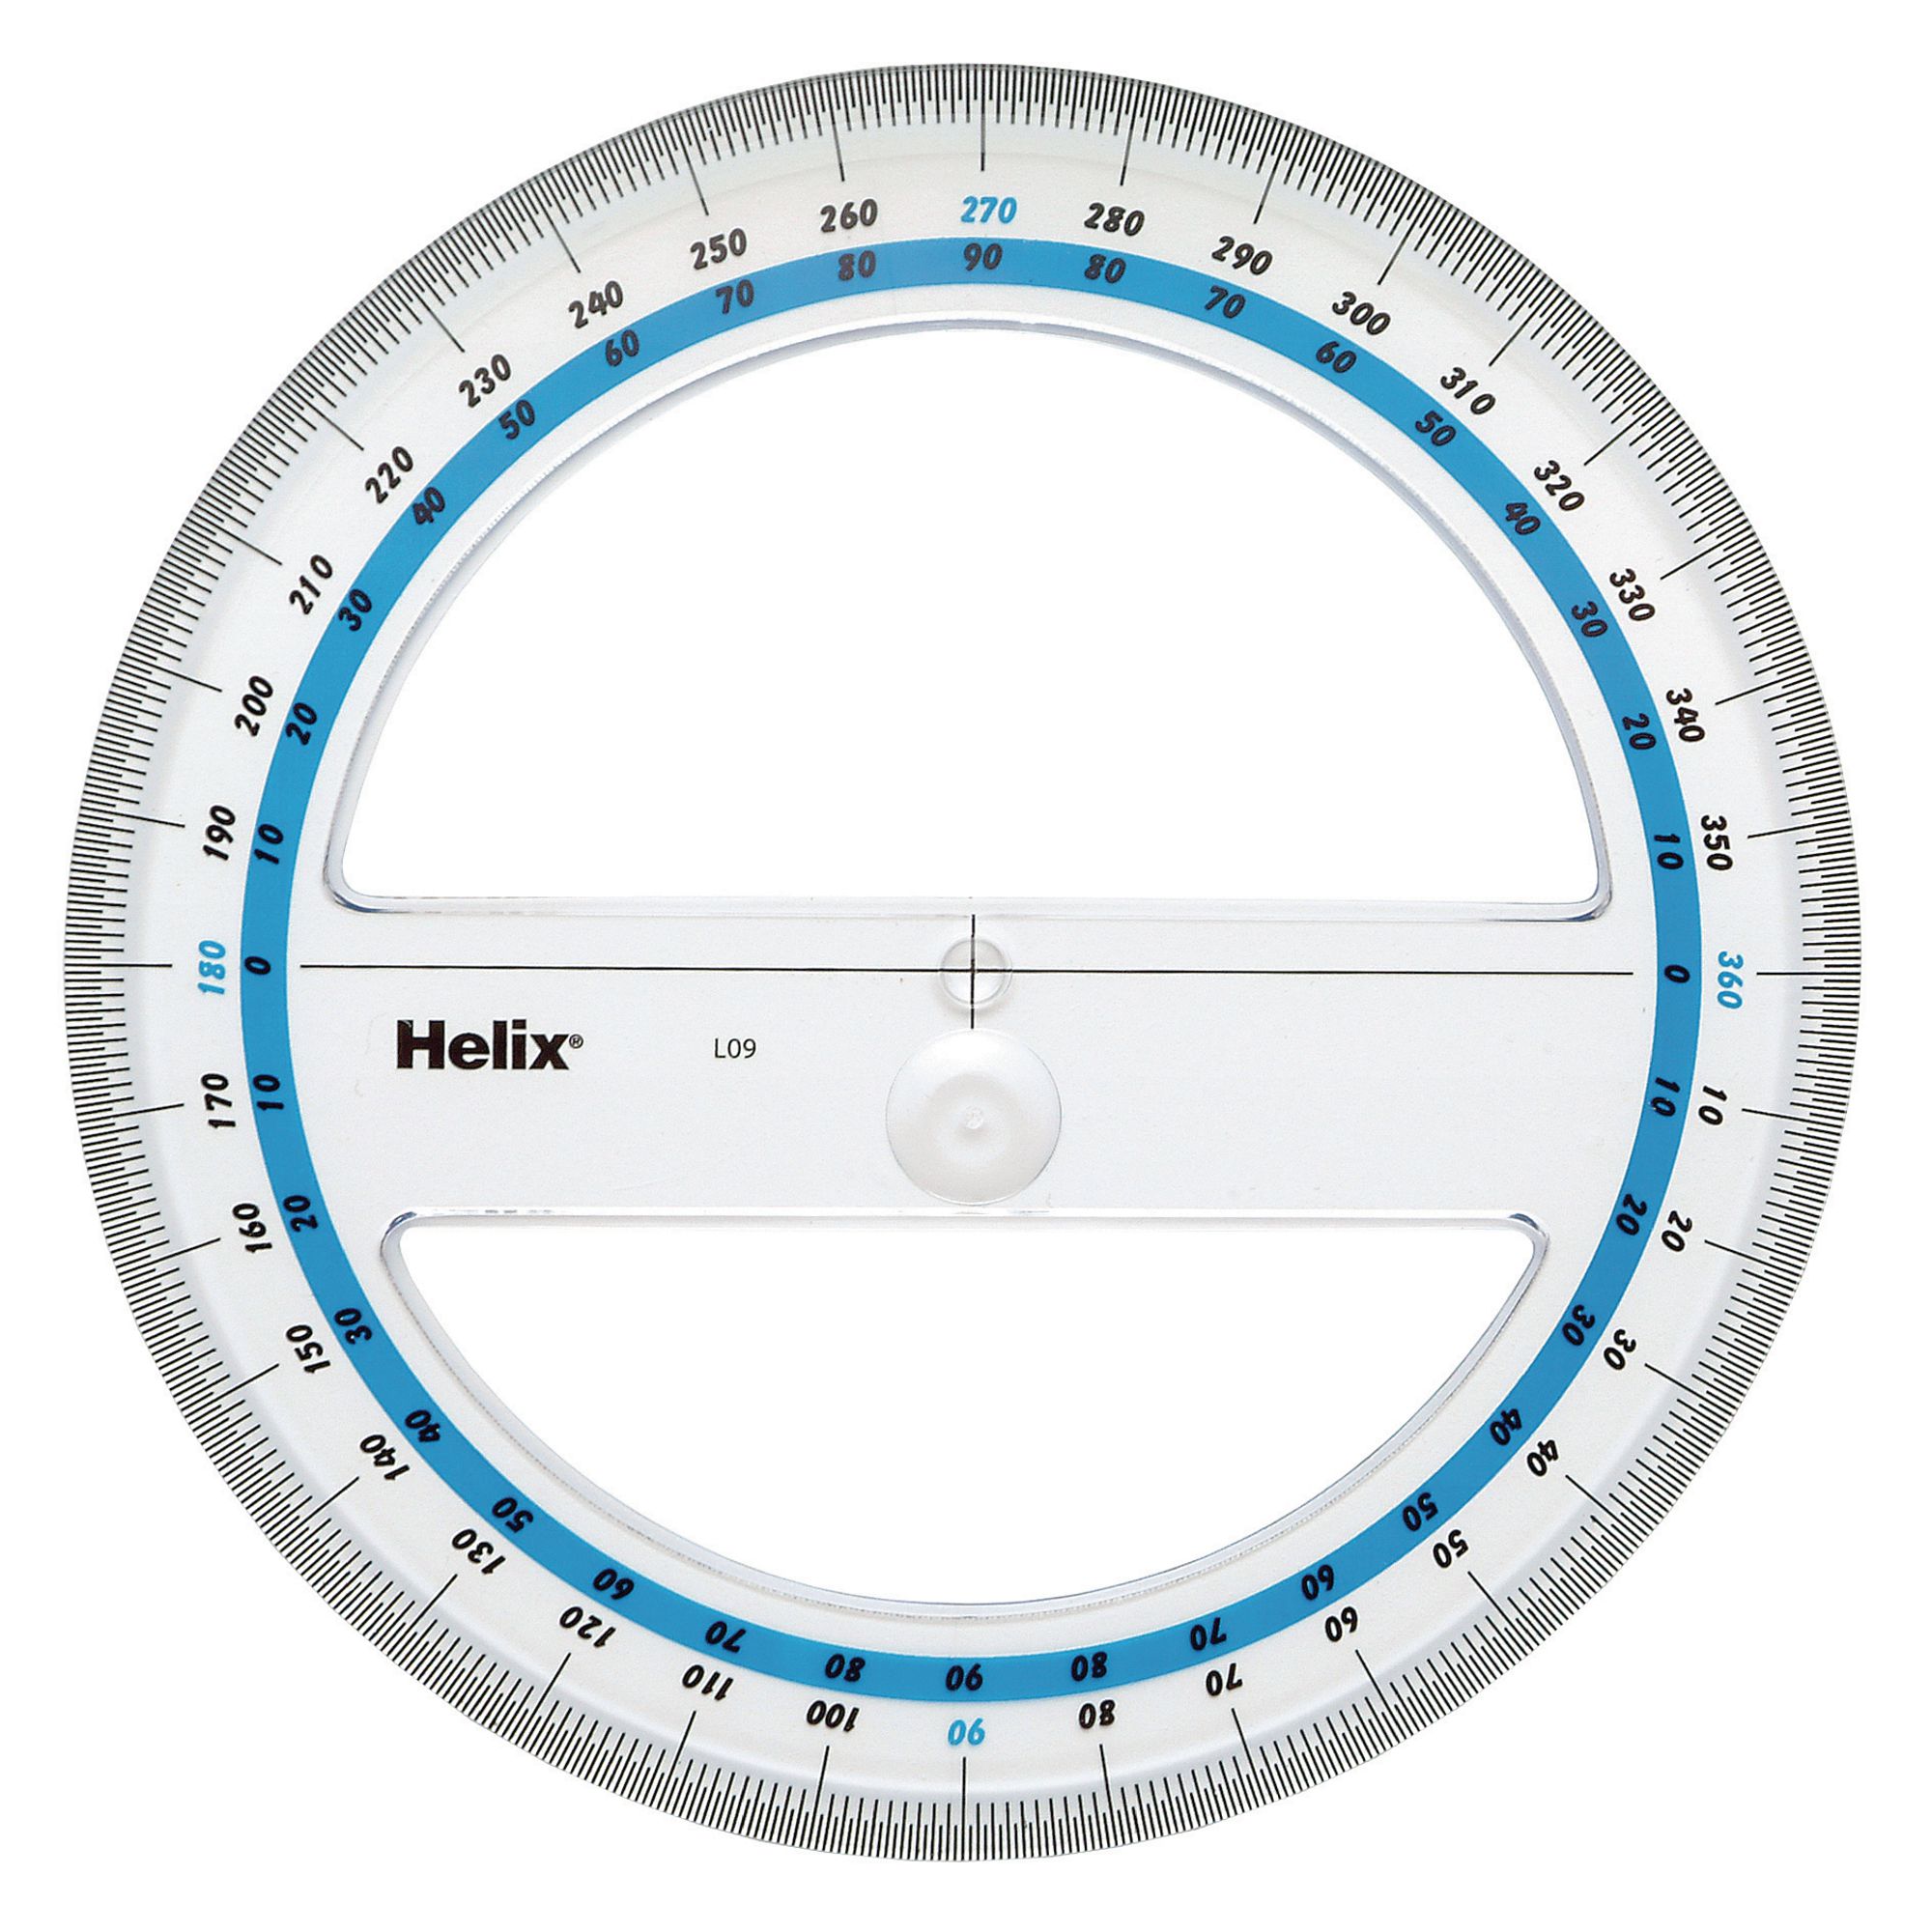 Helix Circle Ruler